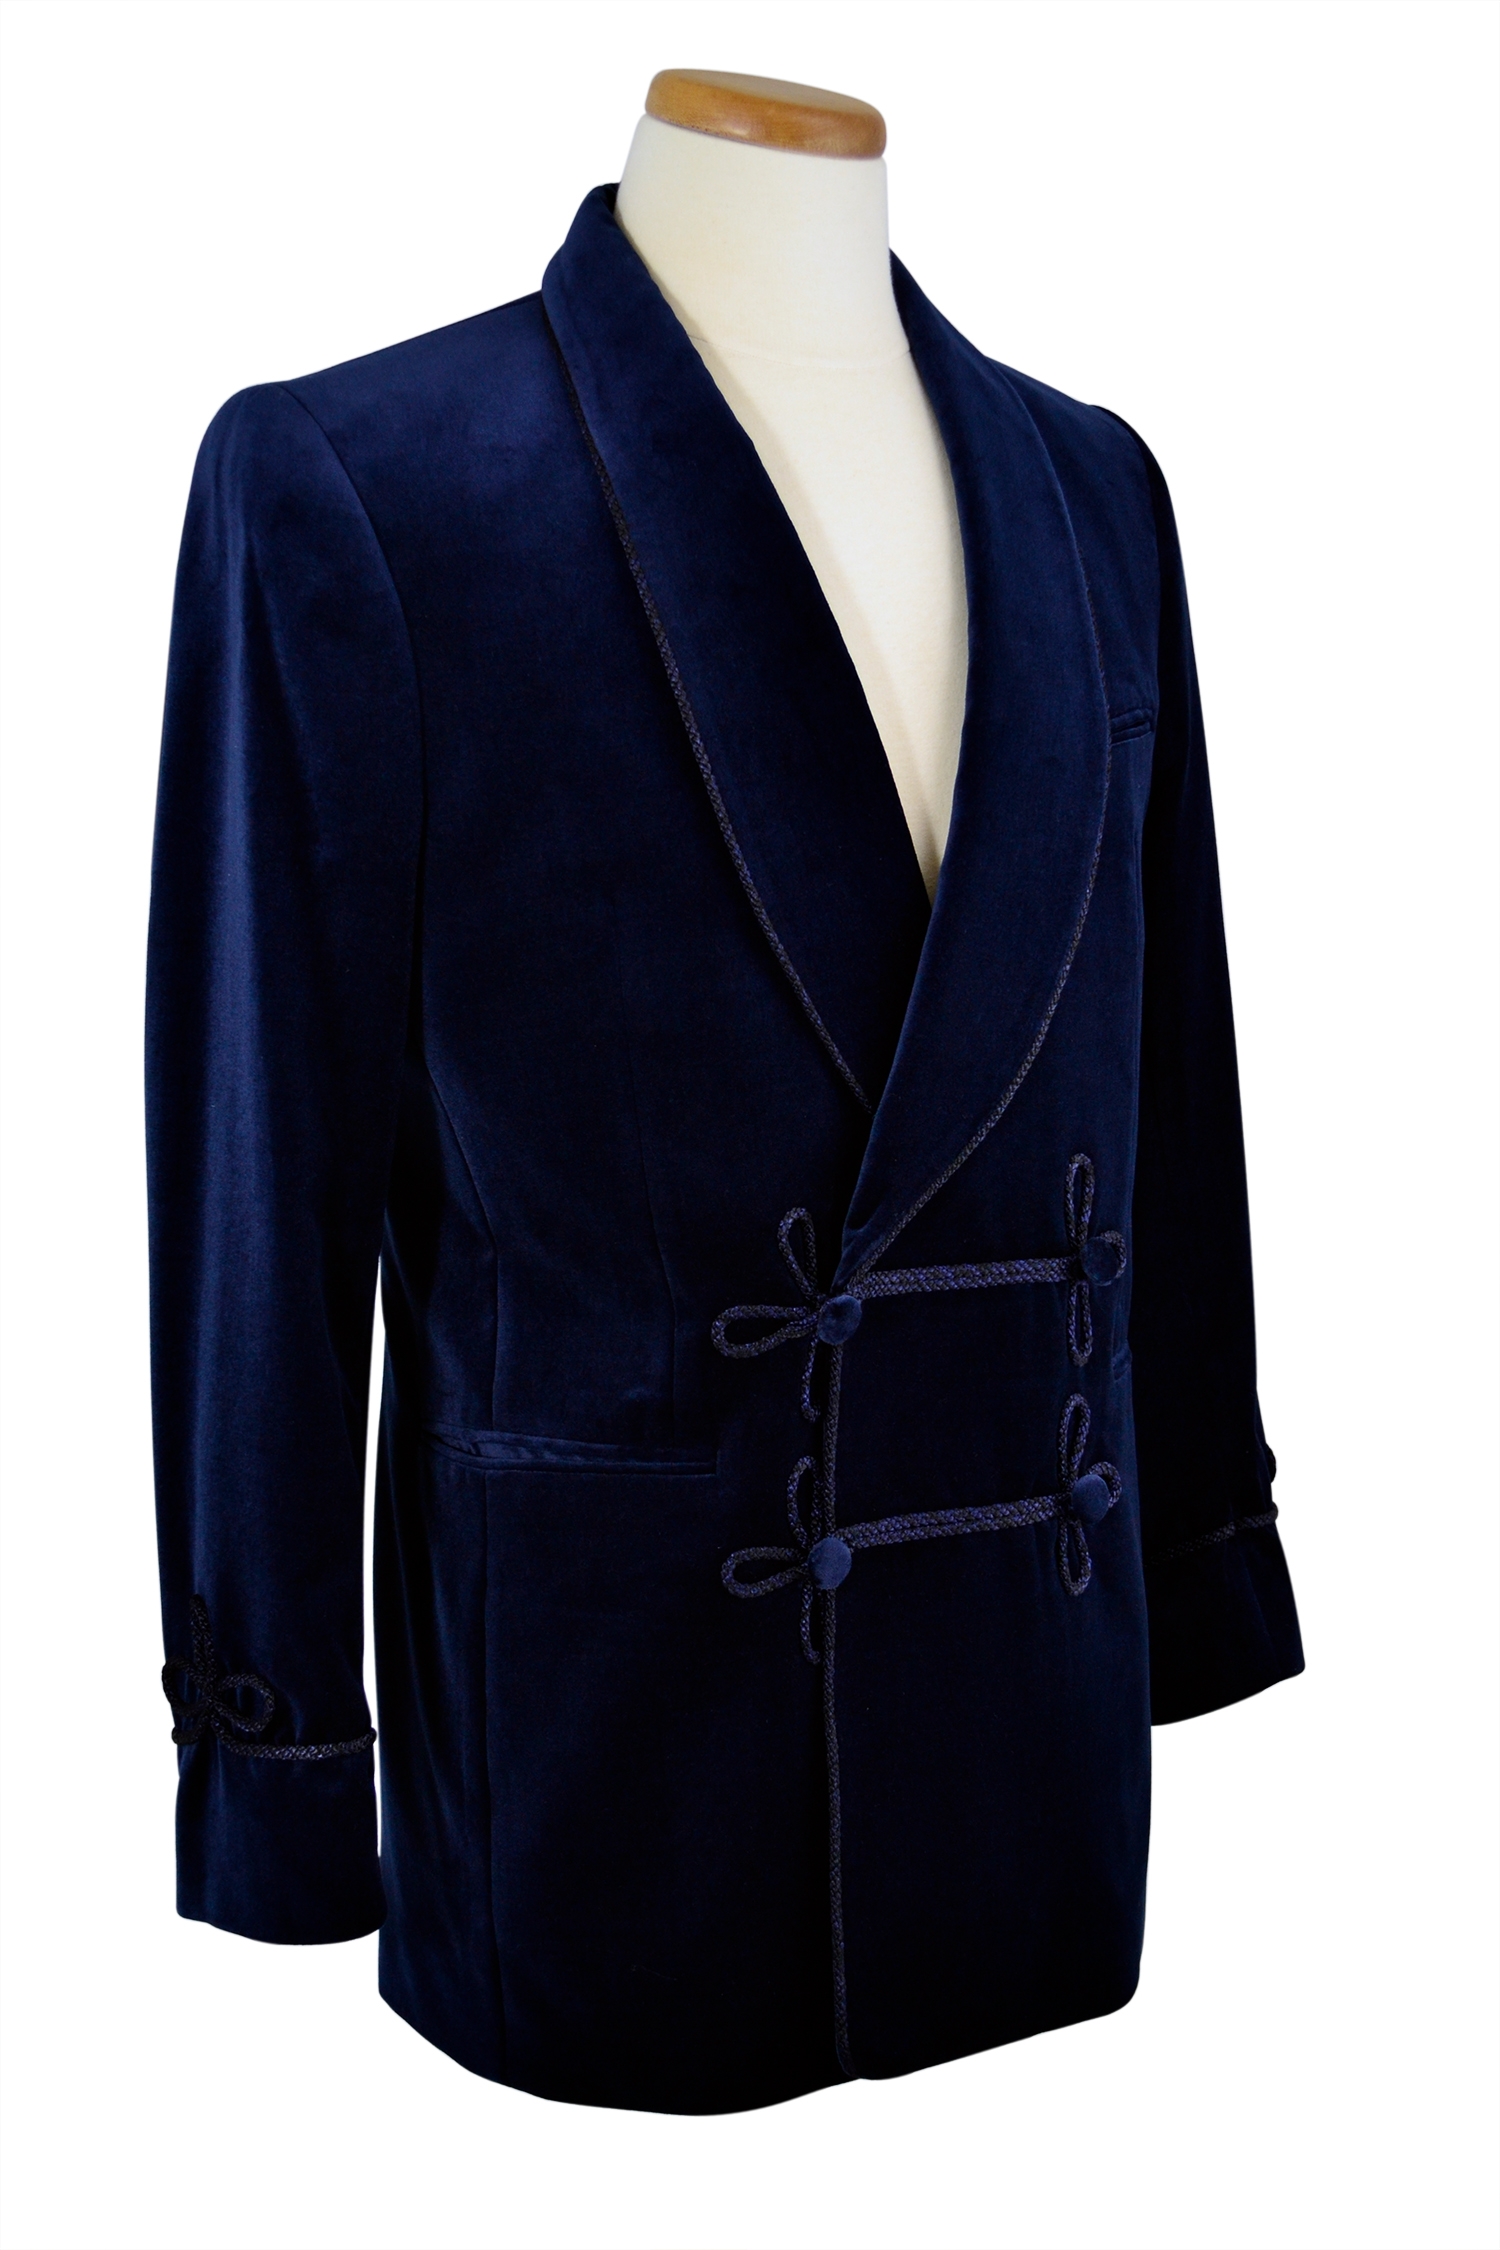 Mens' Jackets & Suits — C.D. Rigden & Son Country Classics